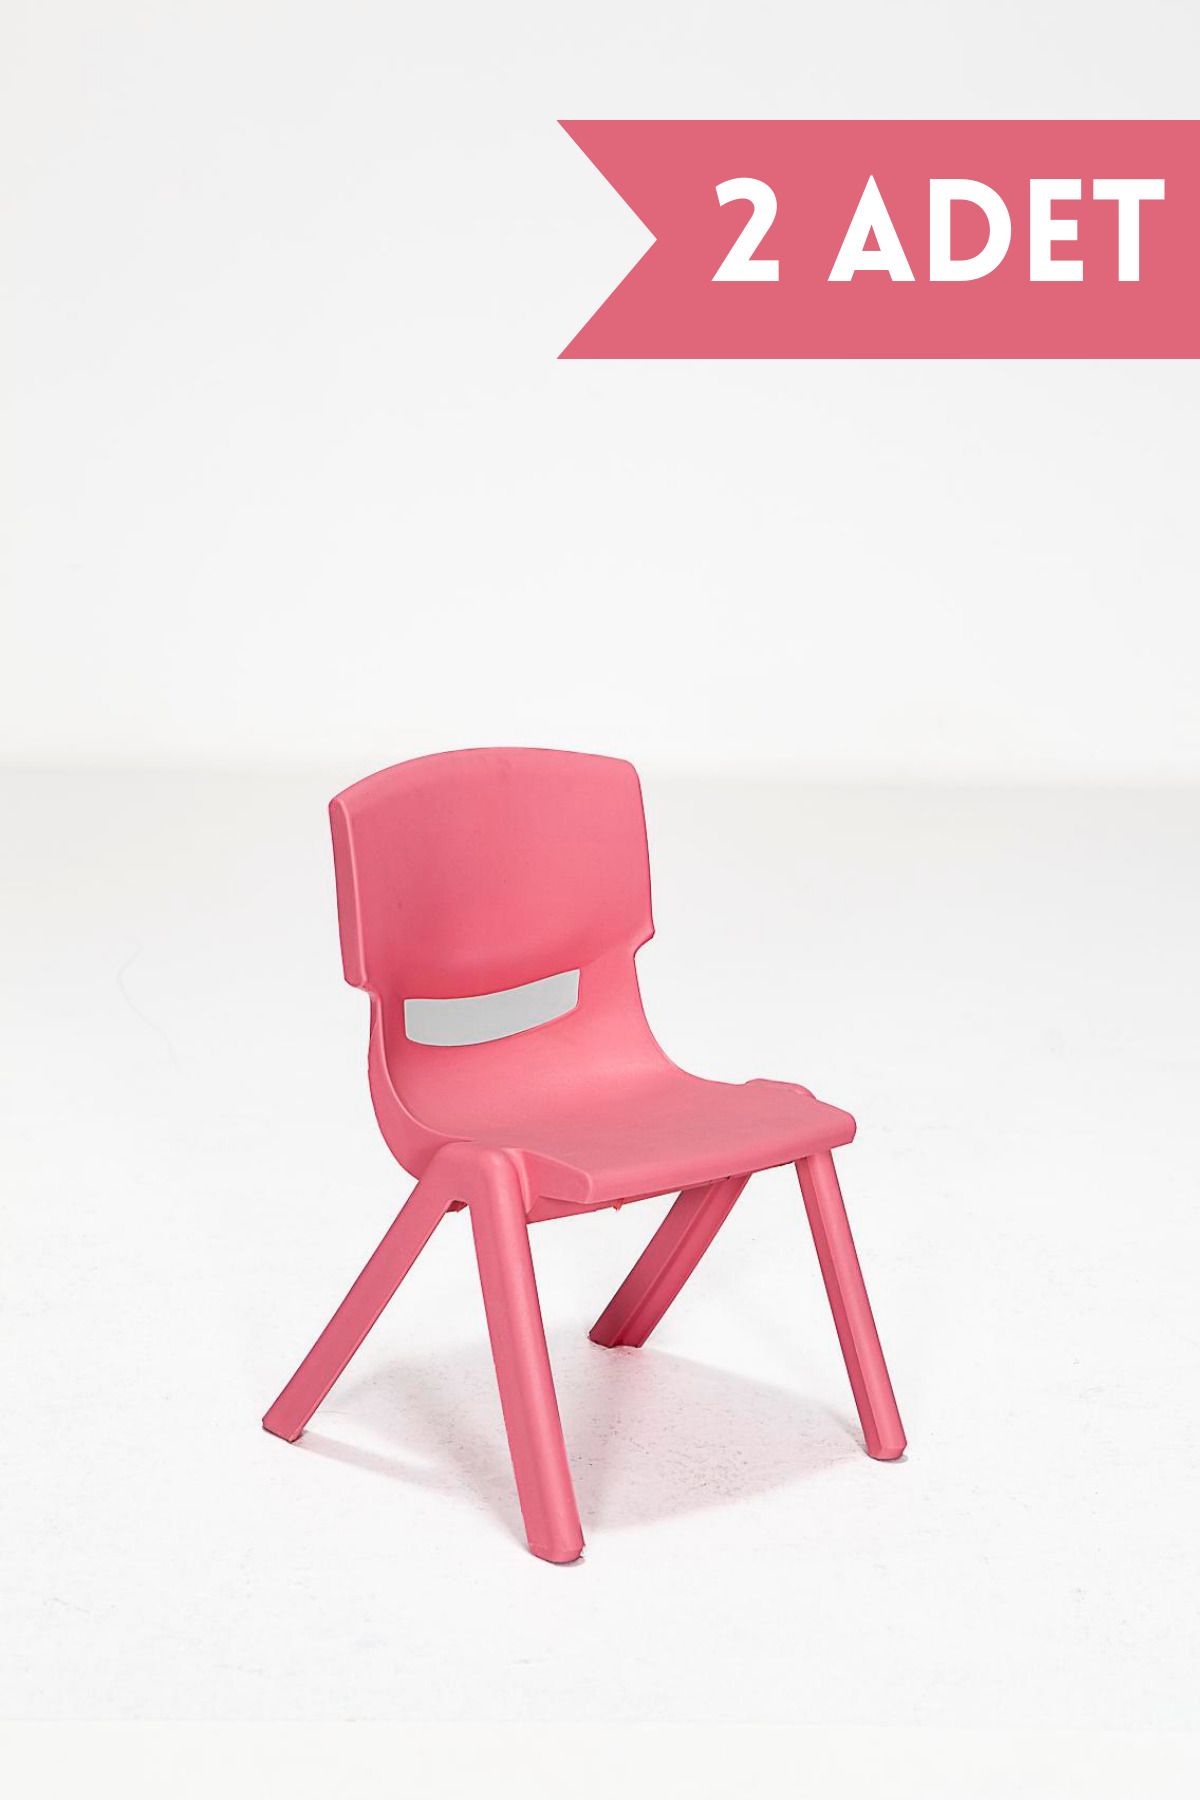 MOBETTO 2 Adet Kreş Anaokulu Çocuk Sandalyesi Sert Plastik- Pembe